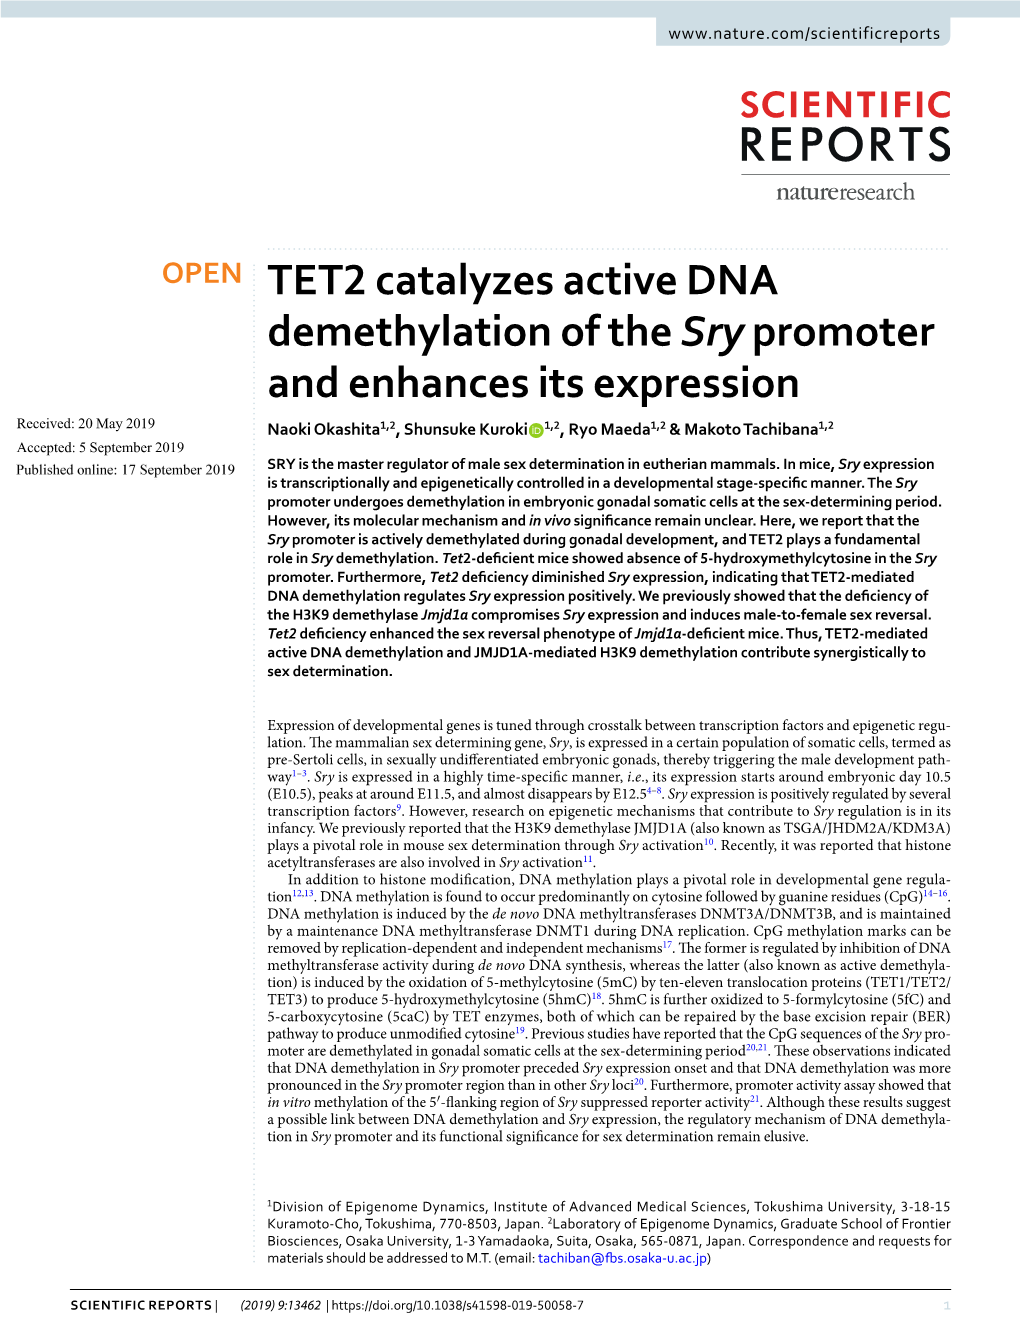 TET2 Catalyzes Active DNA Demethylation of the Sry Promoter